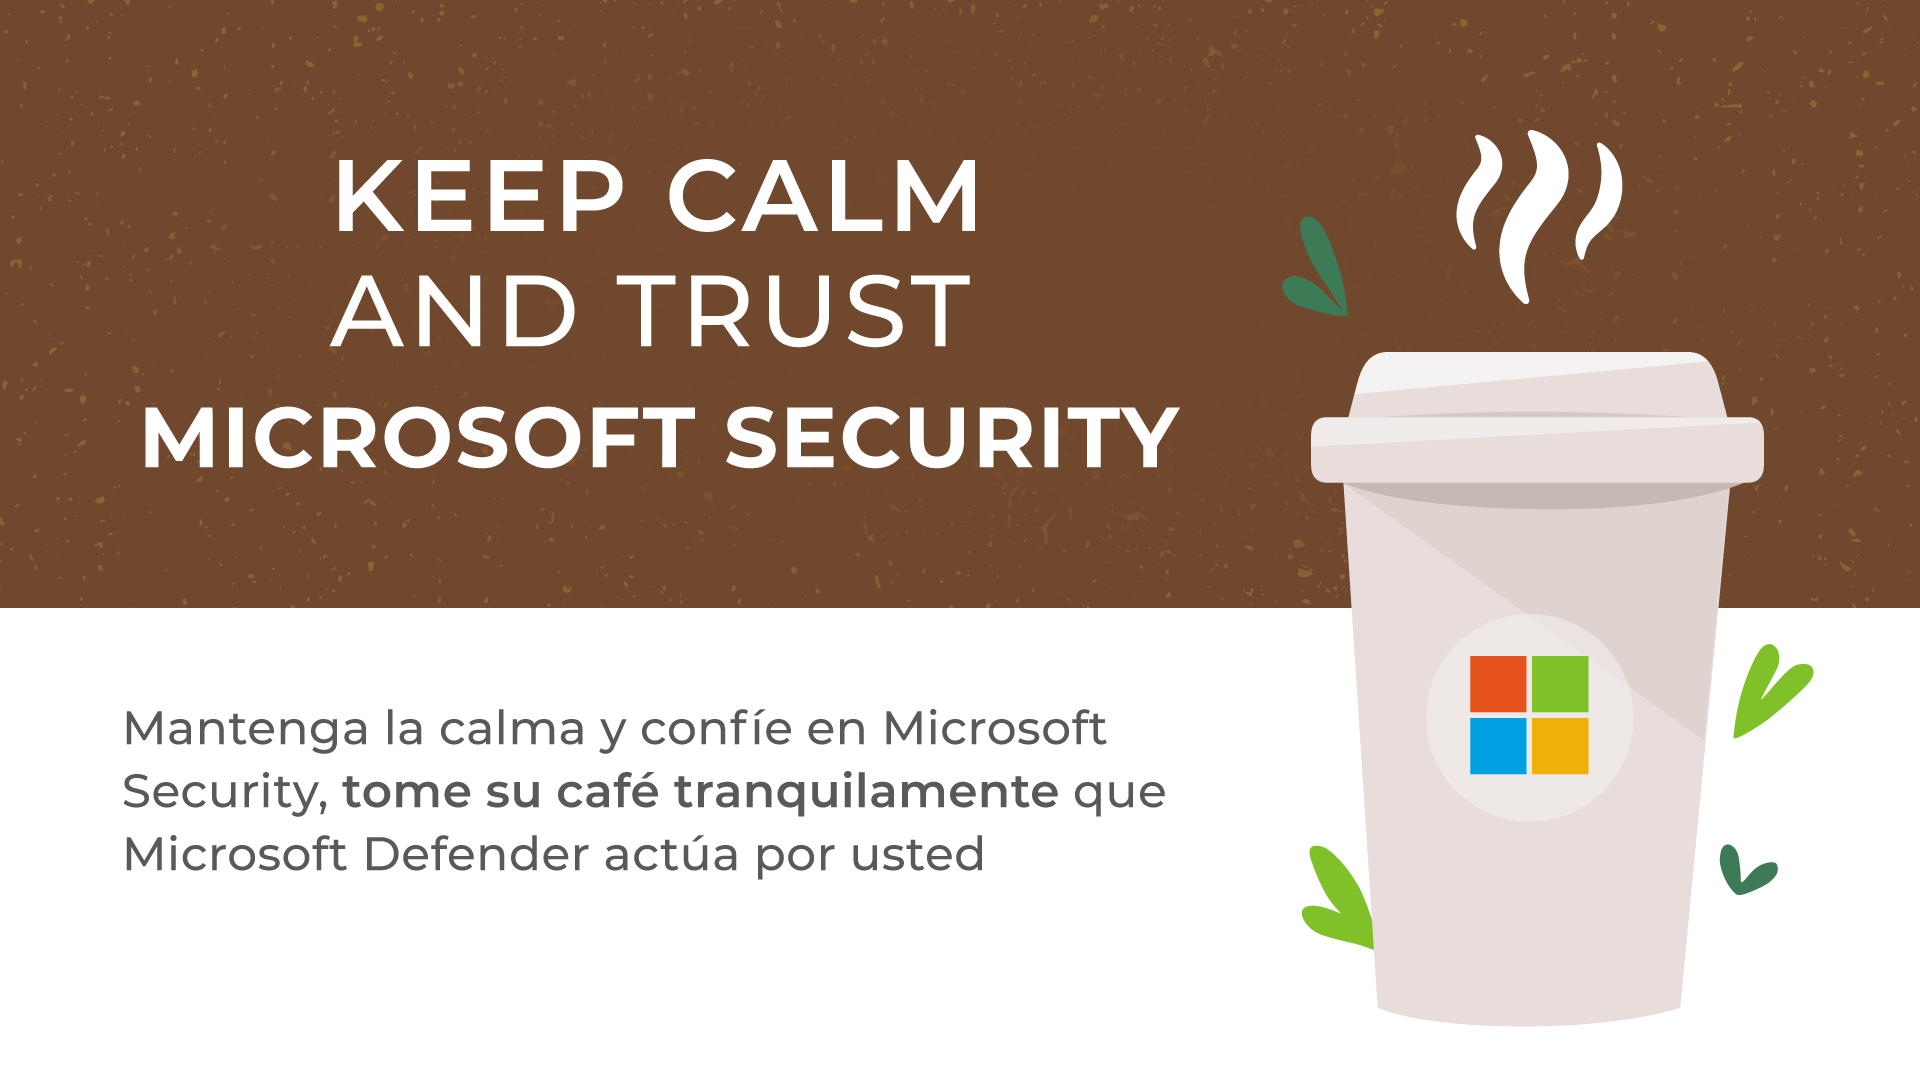 Keep calm and trust Microsoft Security